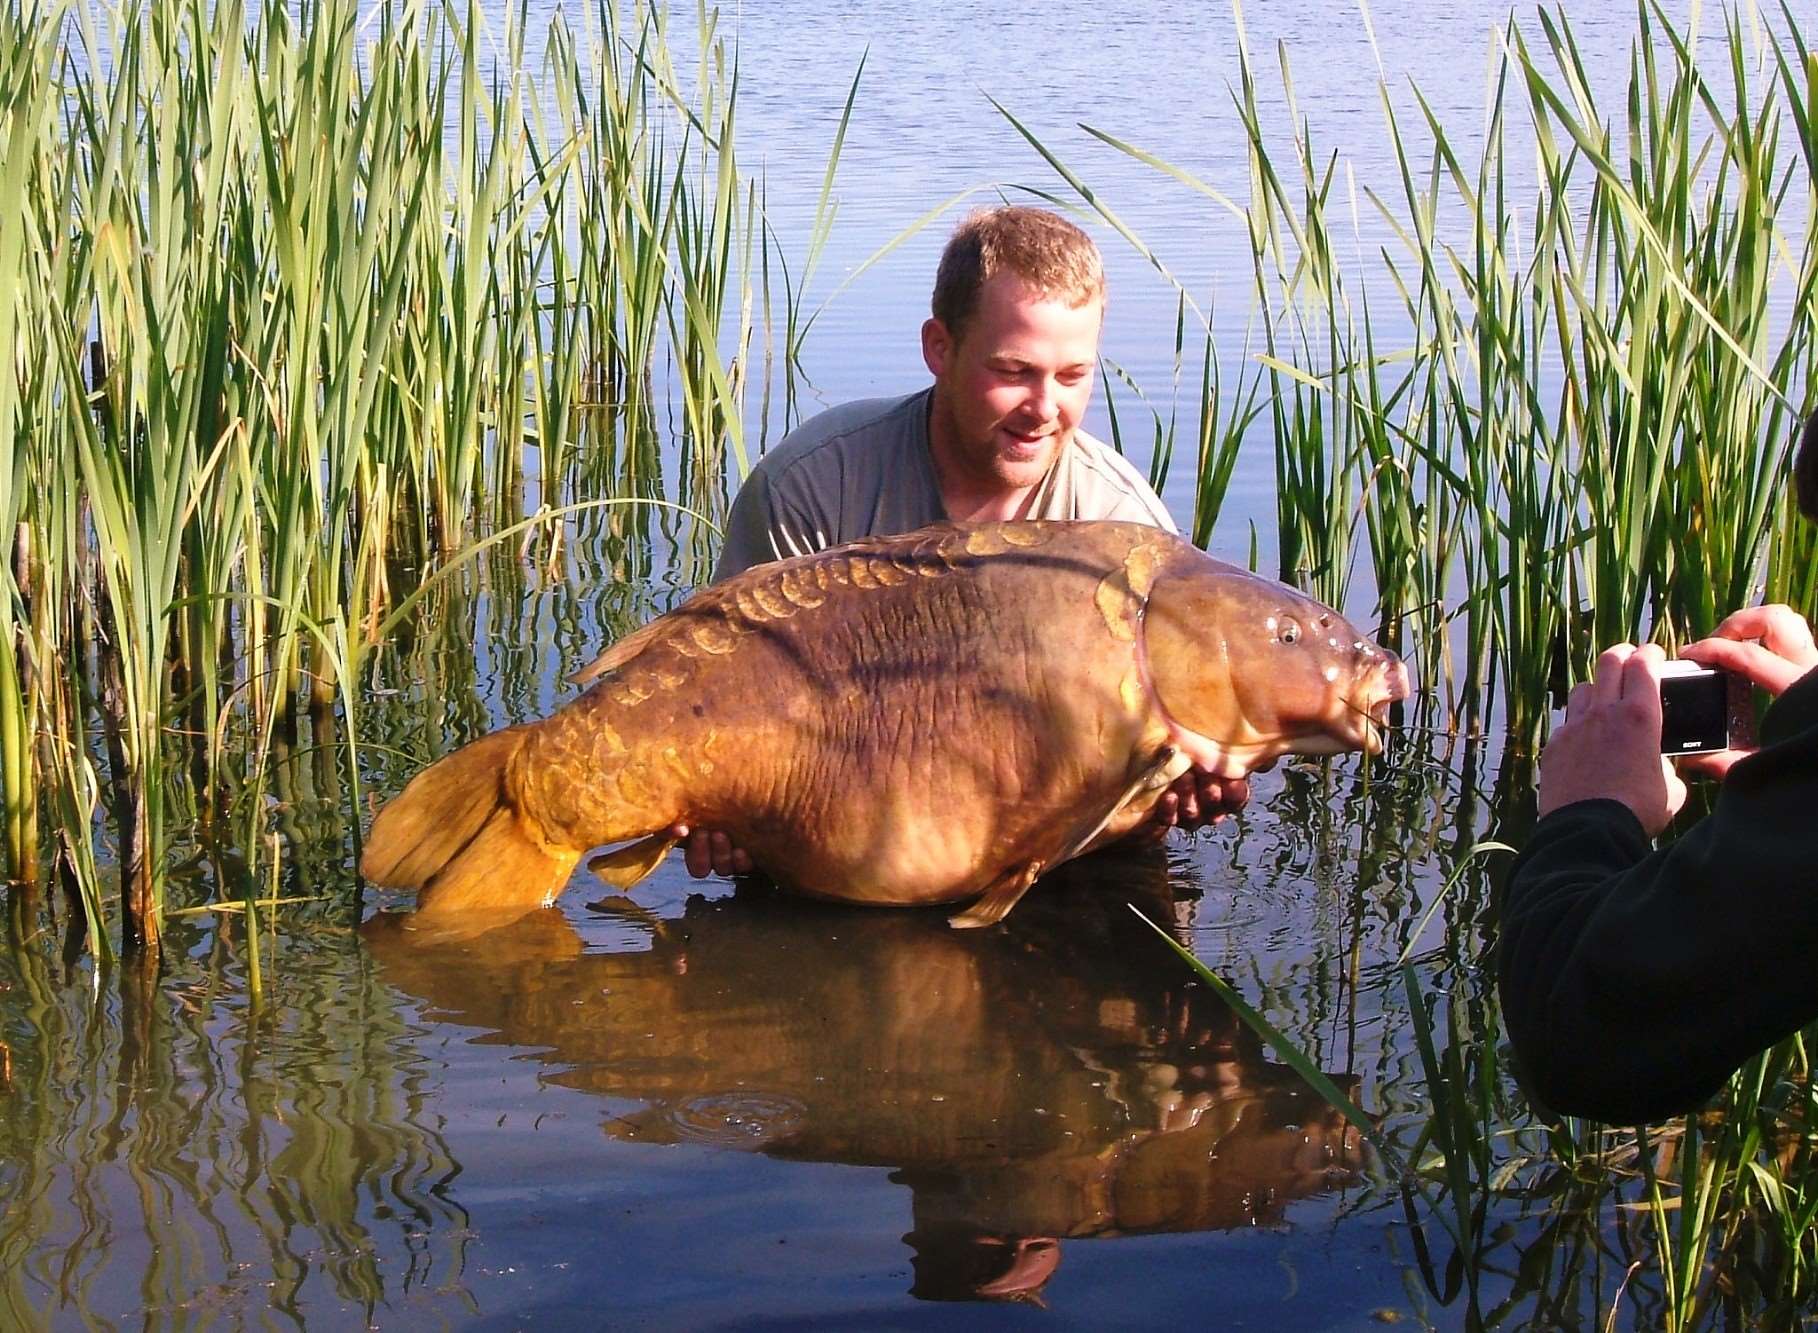 Two Tone - hailed as Britain's biggest carp until his death